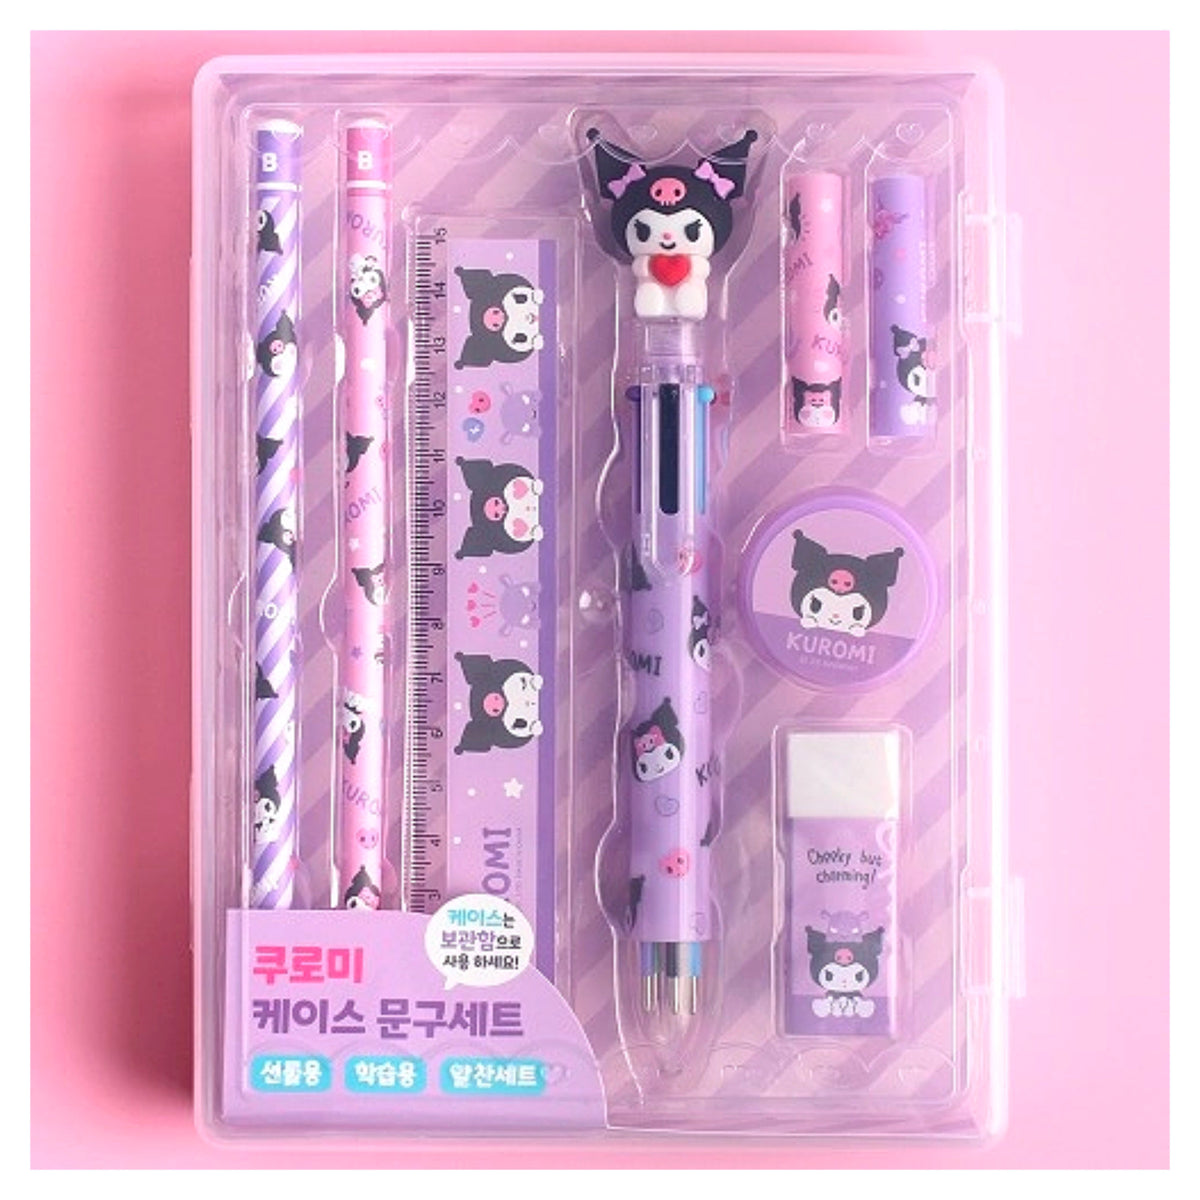 Sanrio Kuromi Stationery Gift Set w/Plastic Case